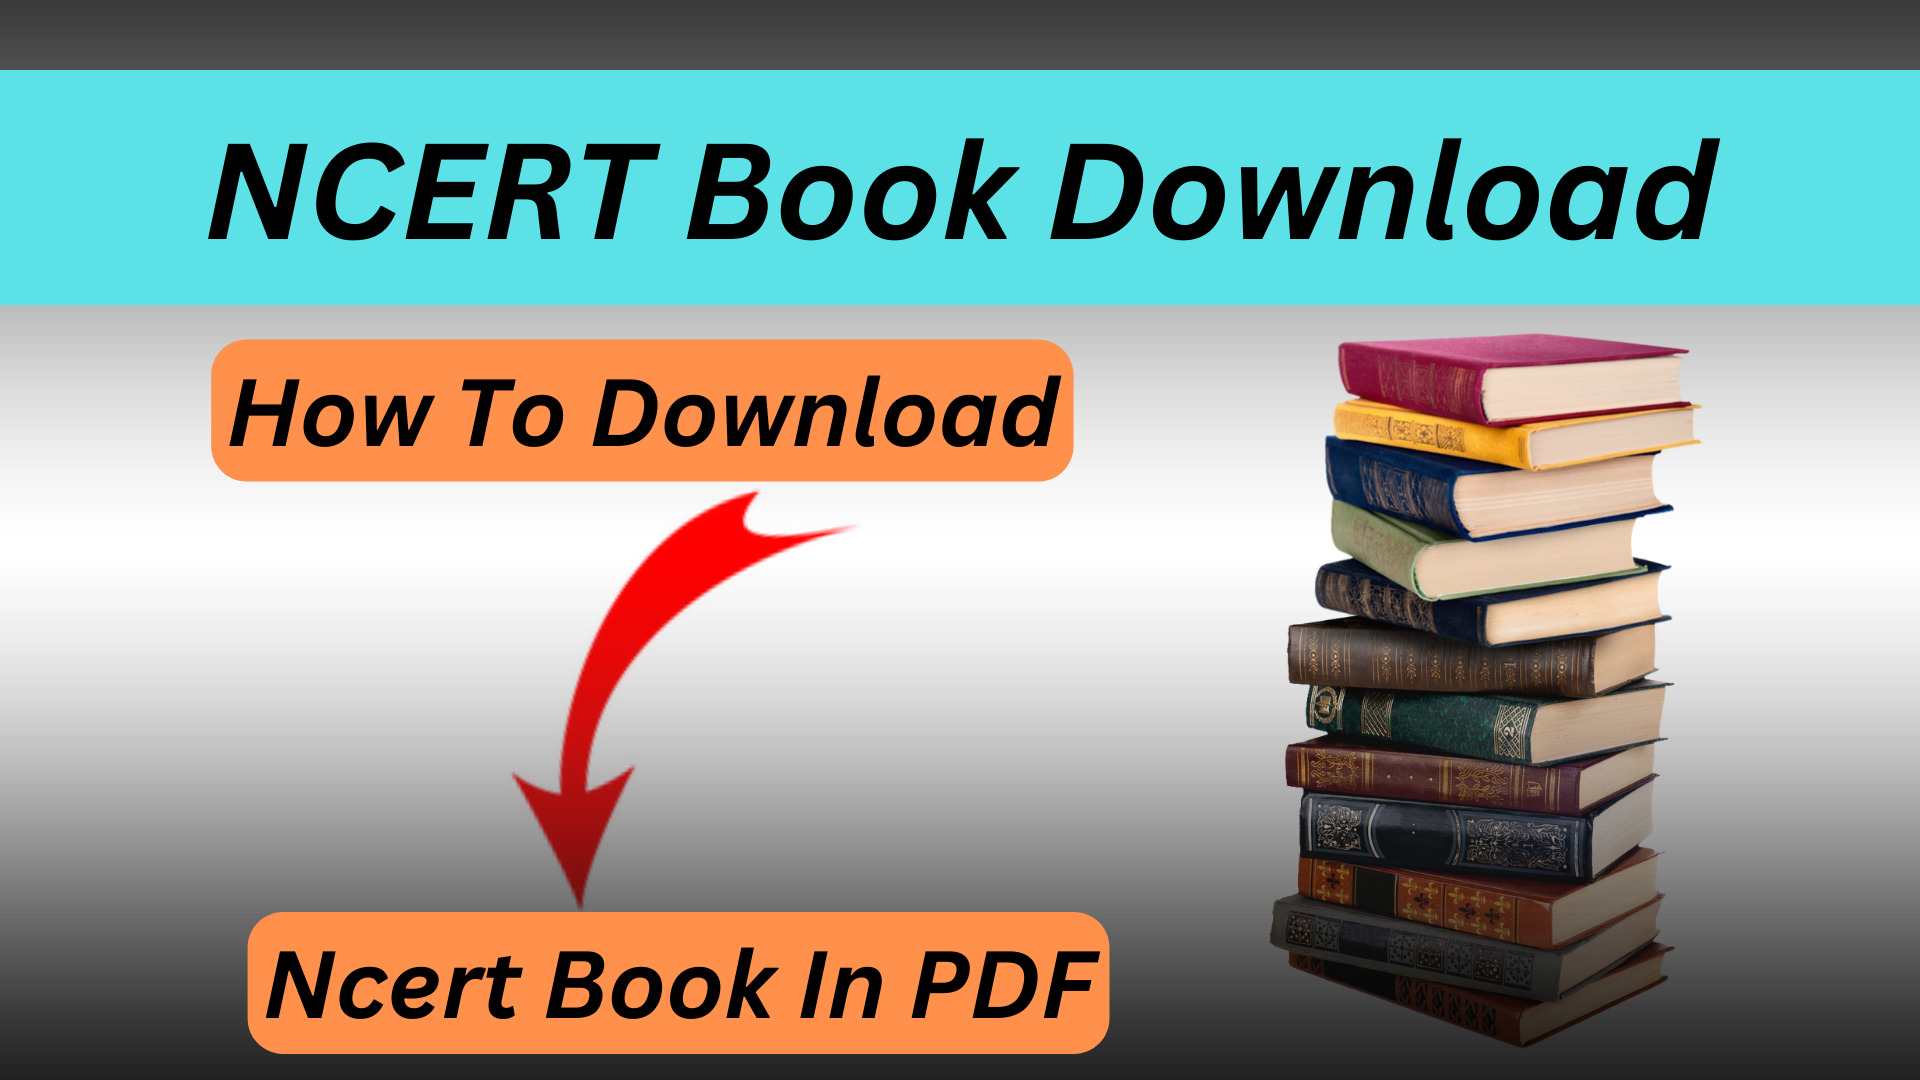 NCERT Book Download In PDF